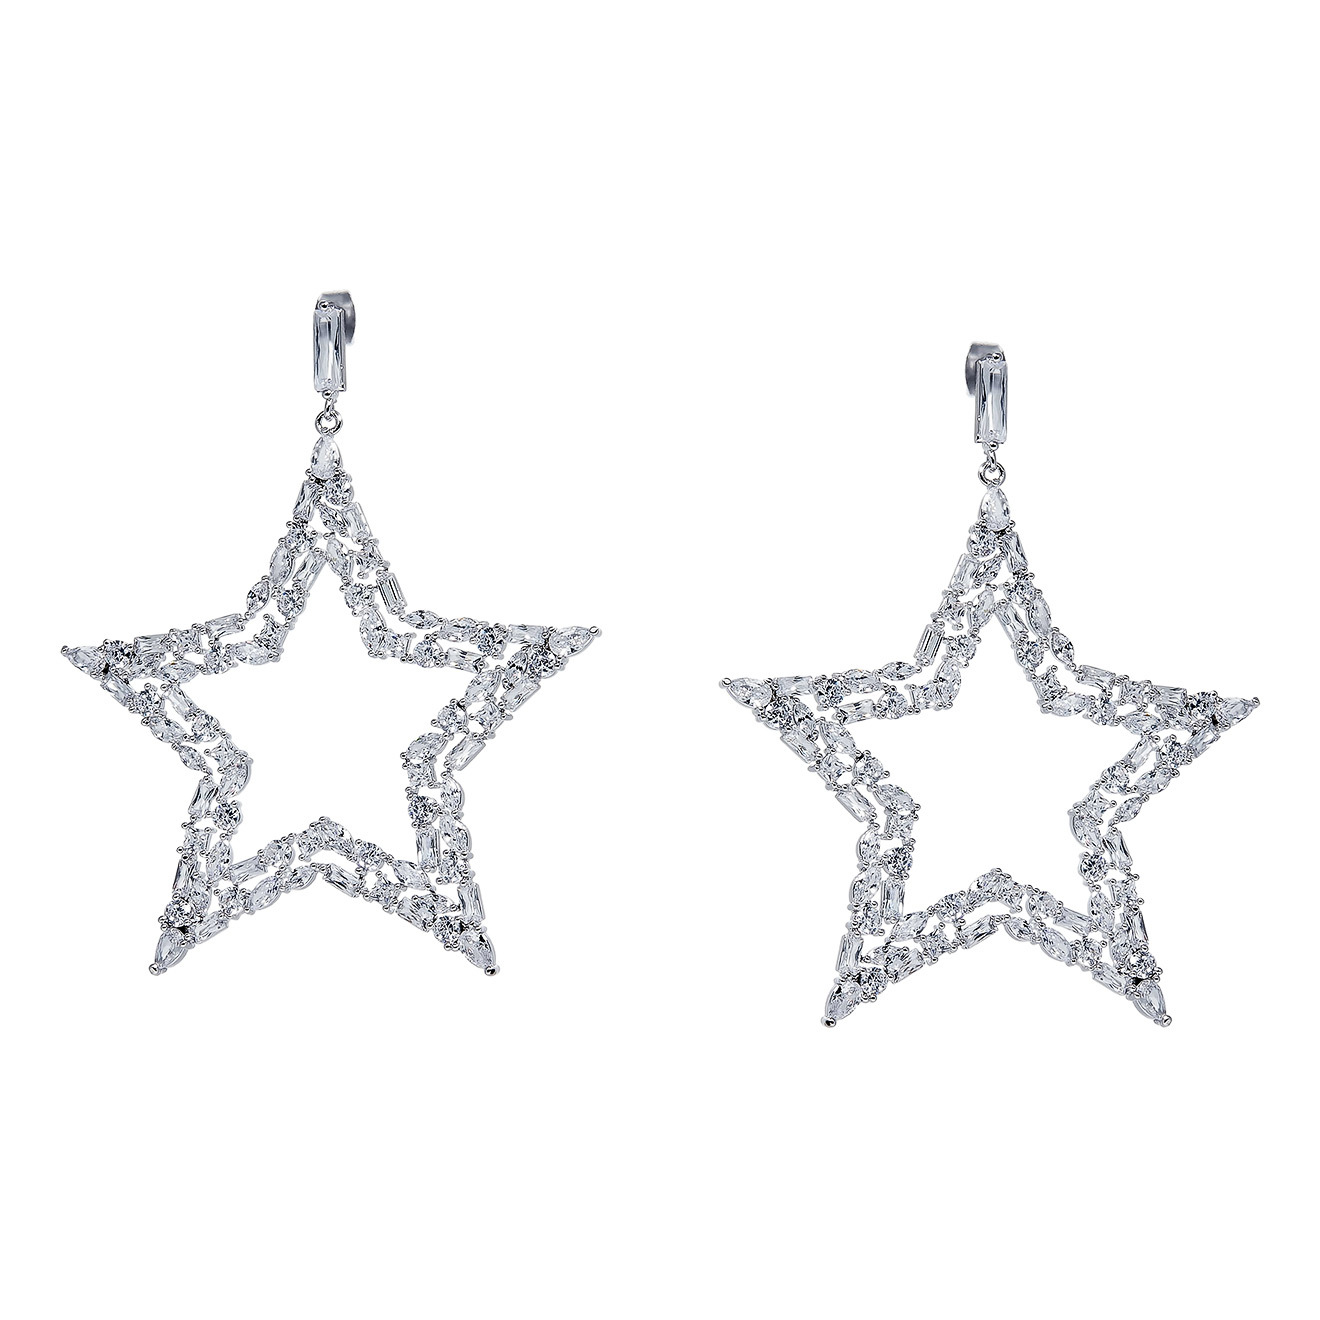 Herald Percy Серебристые серьги-звезды с кристаллами herald percy серебристые серьги крылья бабочки с кристаллами